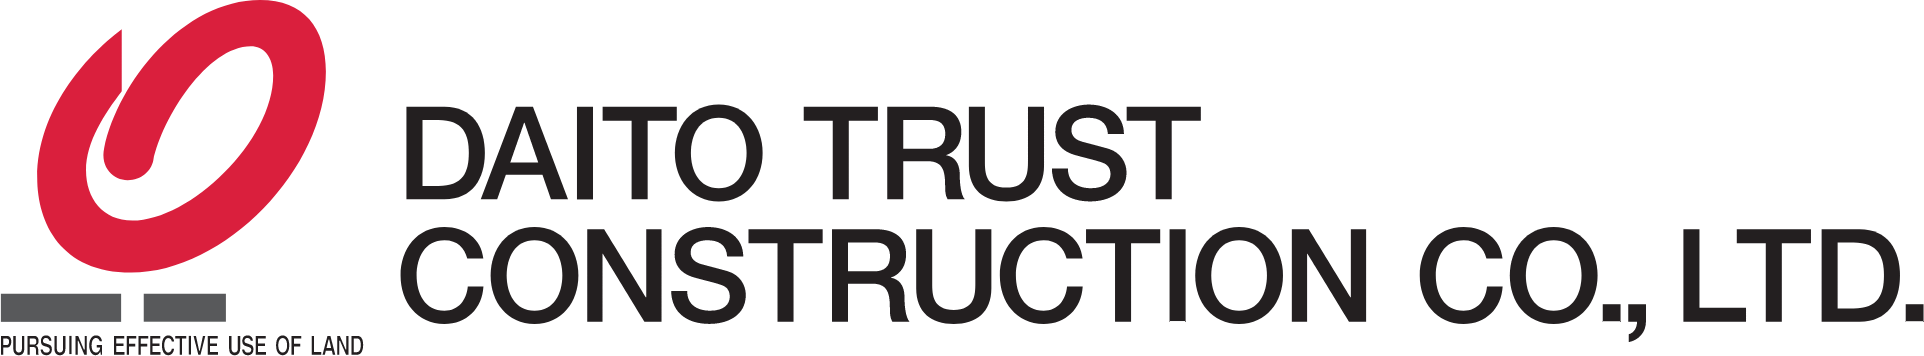 Daito Trust Construction
 logo large (transparent PNG)